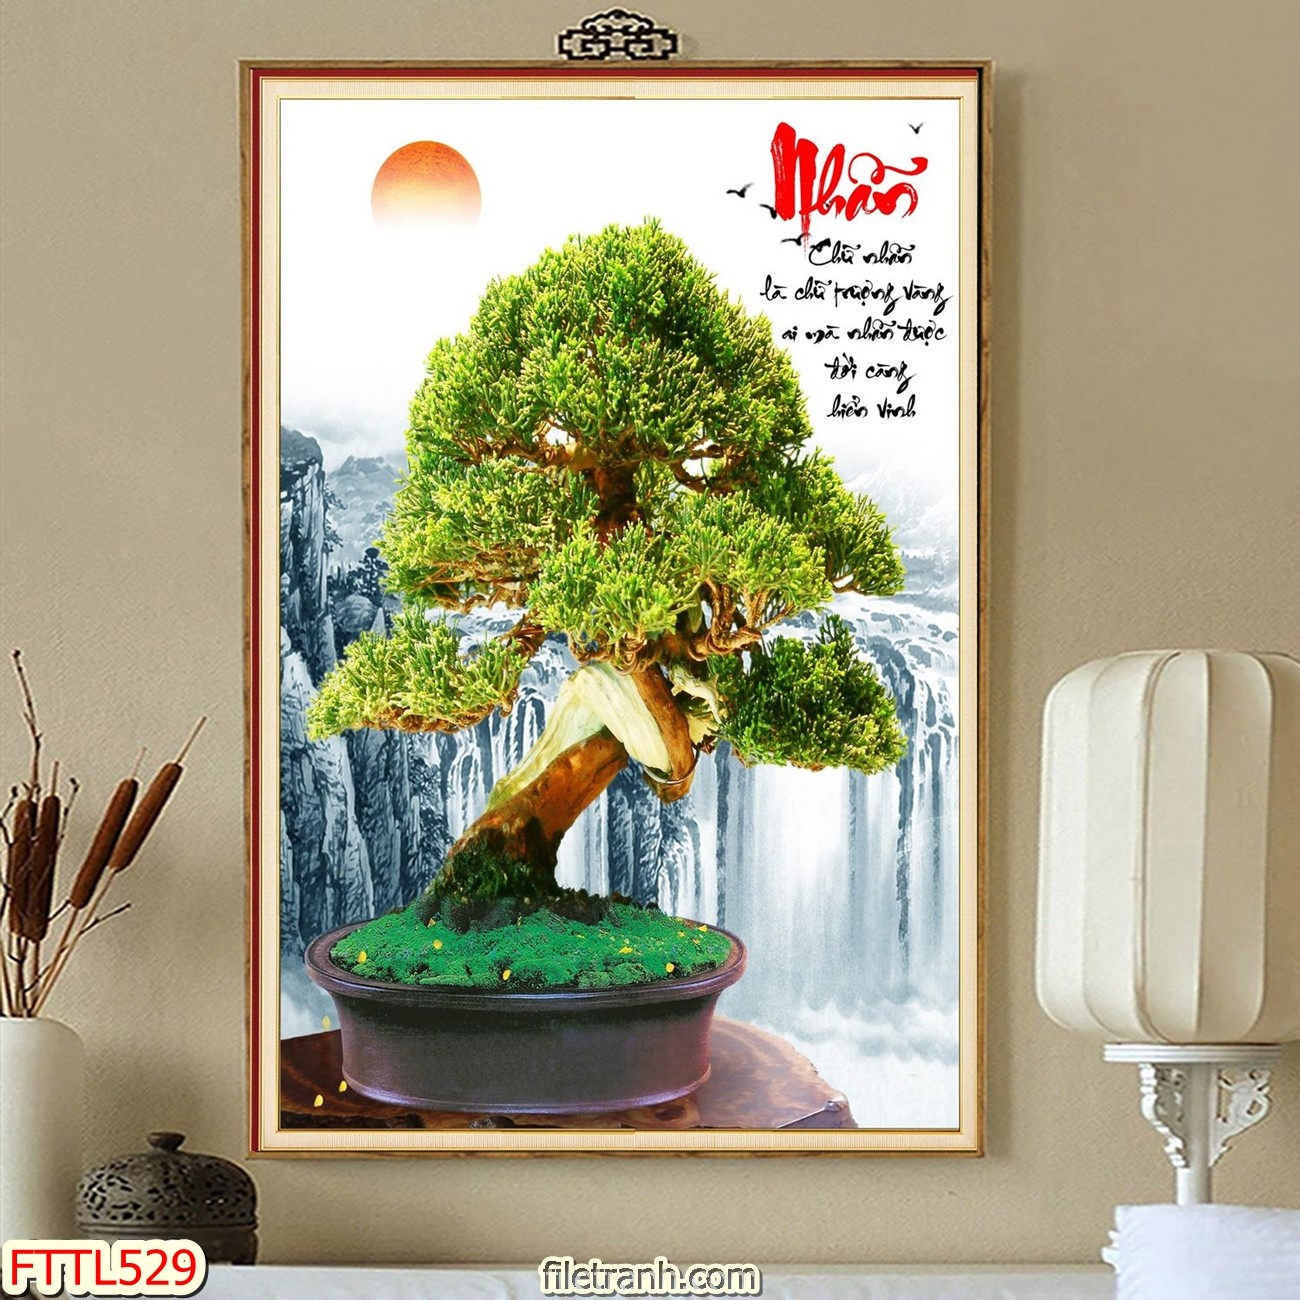 https://filetranh.com/file-tranh-chau-mai-bonsai/file-tranh-chau-mai-bonsai-fttl529.html